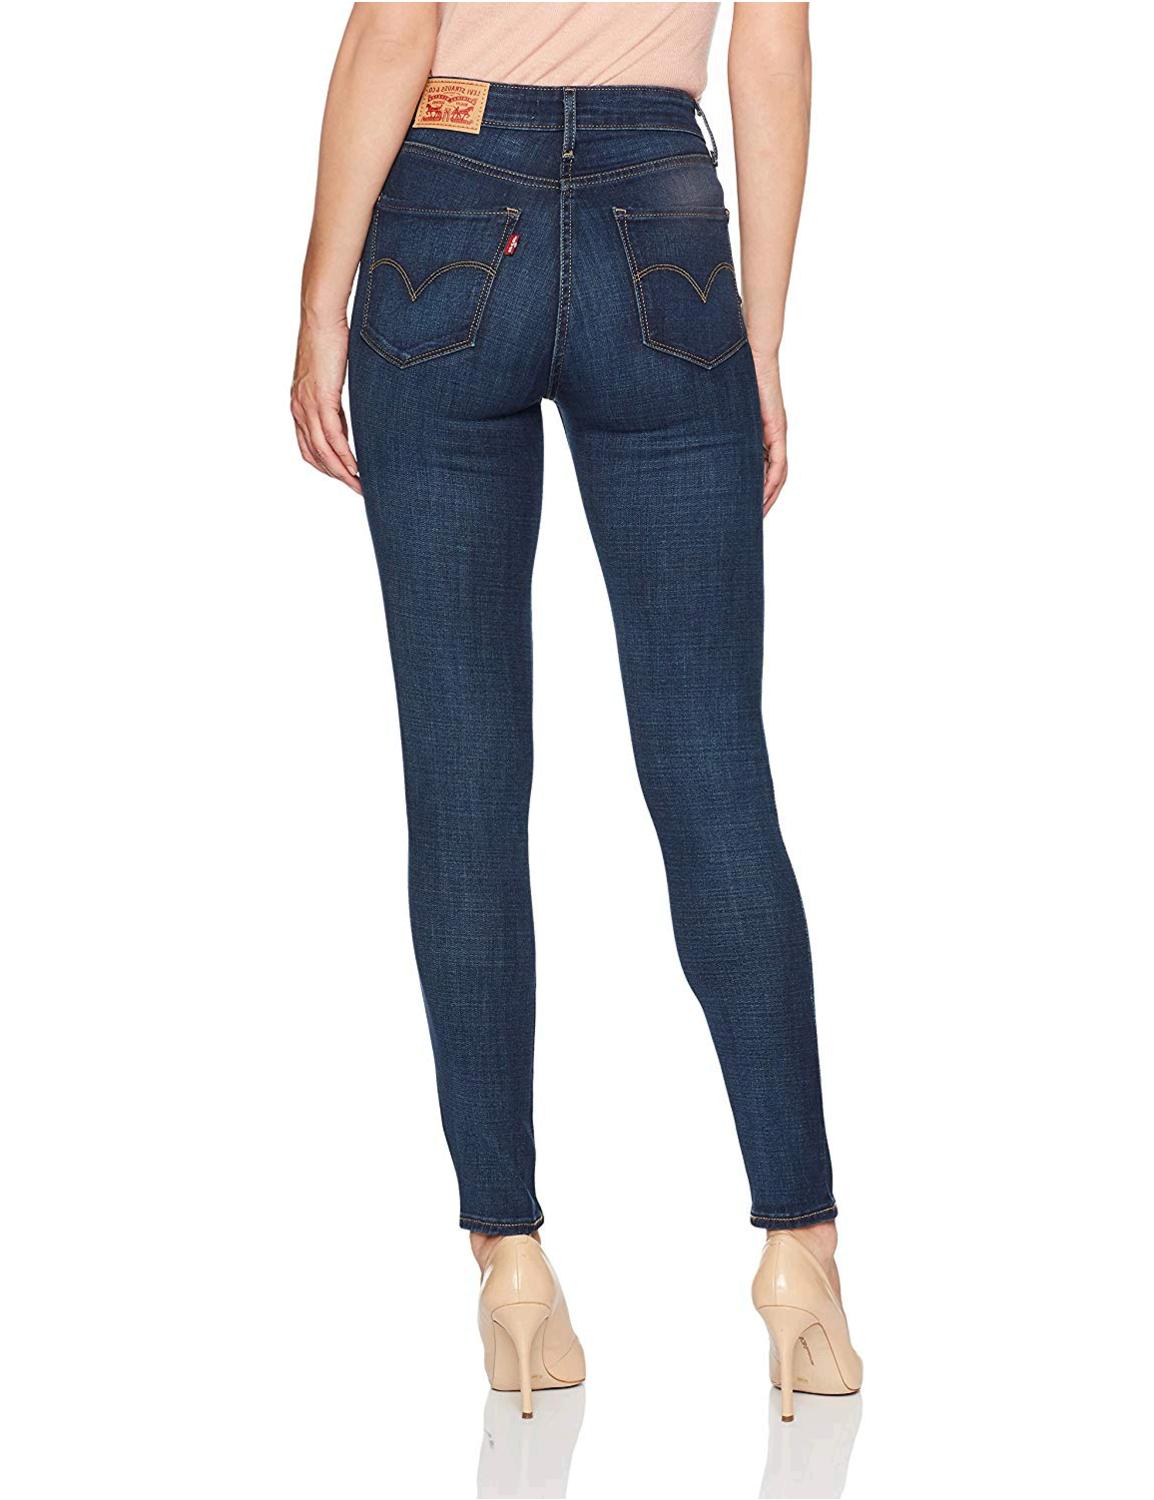 levi-s-women-s-721-high-rise-skinny-jeans-blue-blue-story-size-34-short-qm5n-ebay